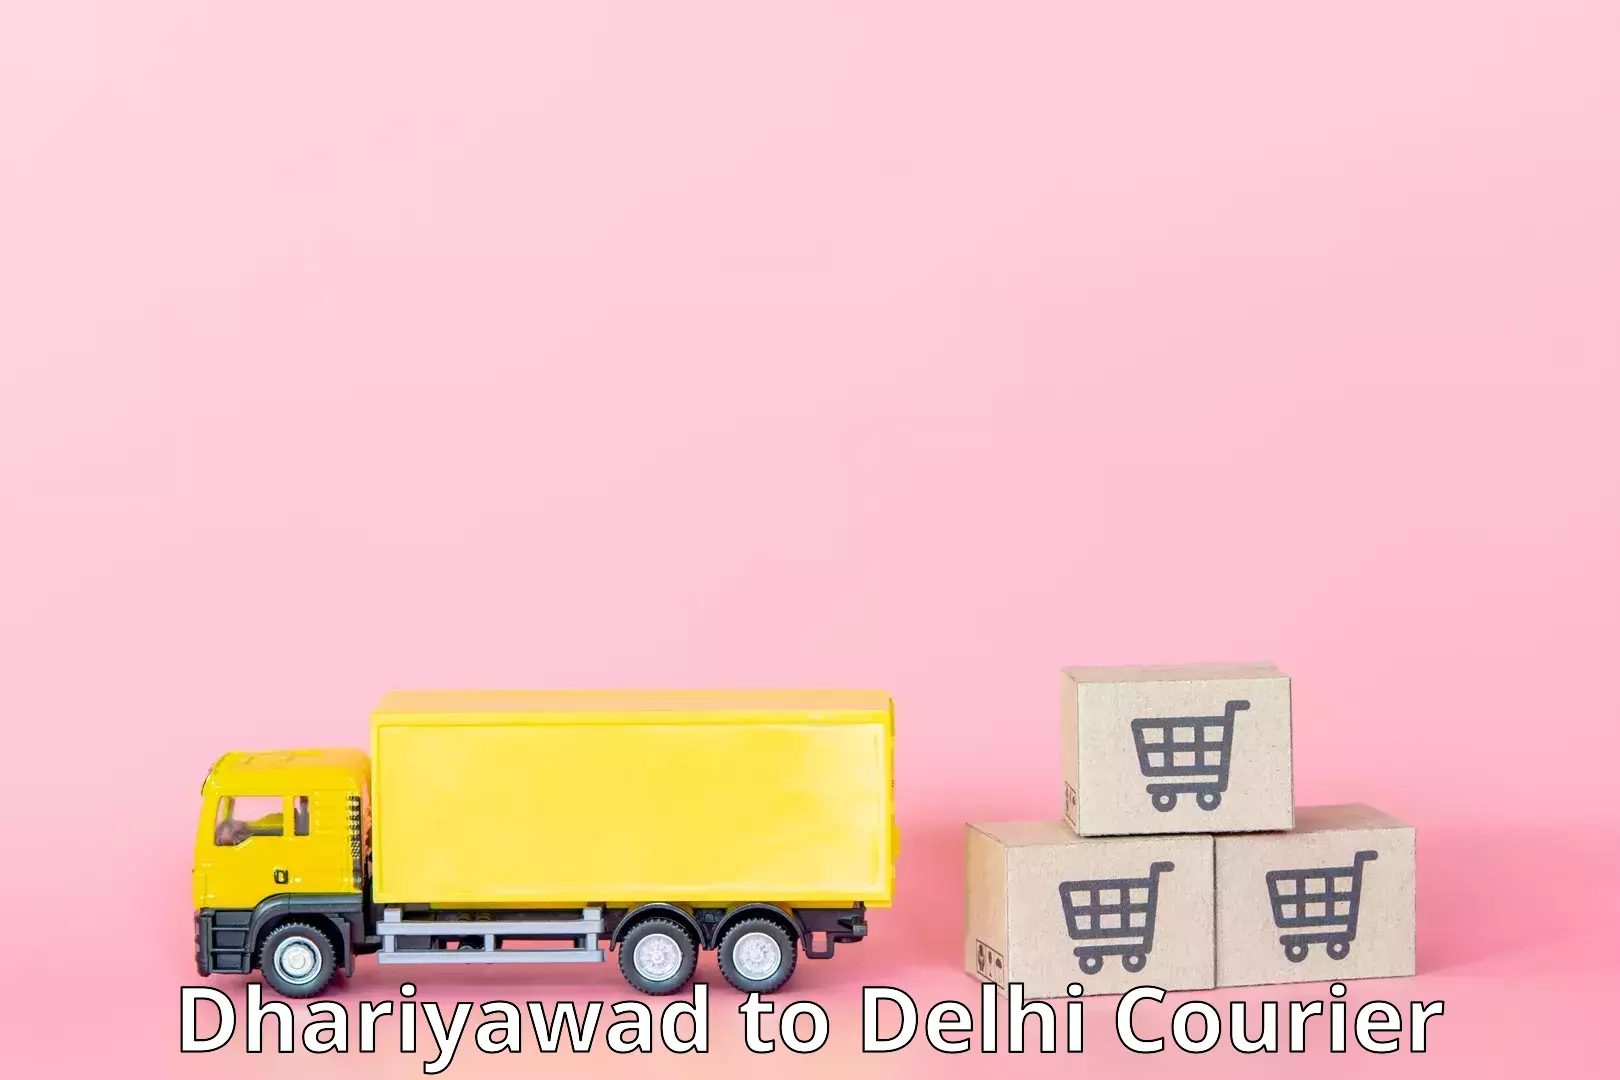 Tech-enabled shipping Dhariyawad to East Delhi